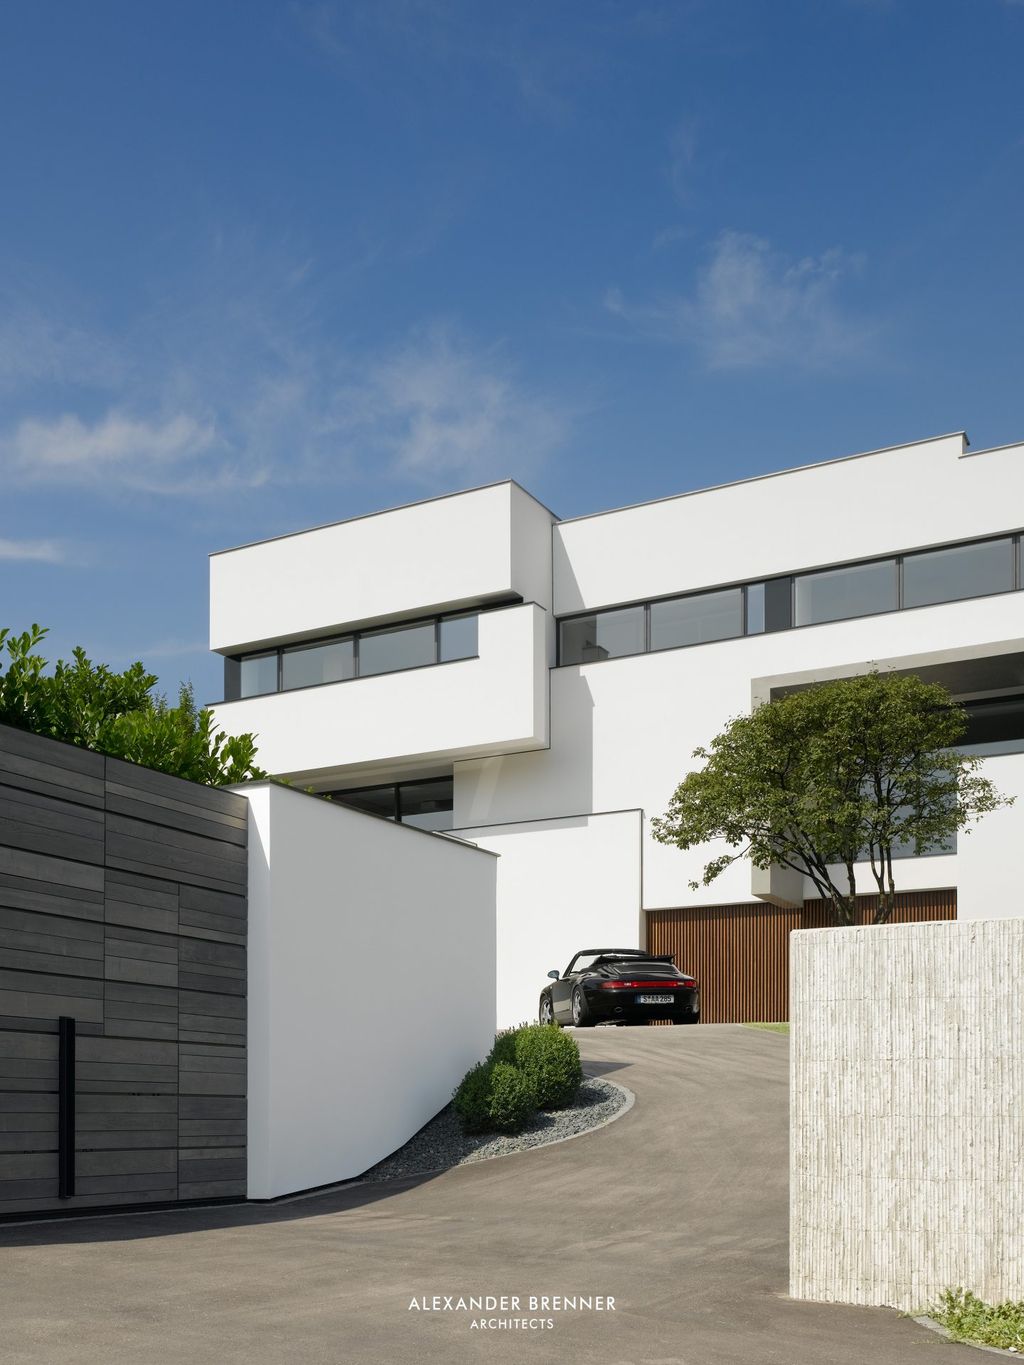 The Elegant House Strauss in Stuttgart by Alexander Brenner Architects